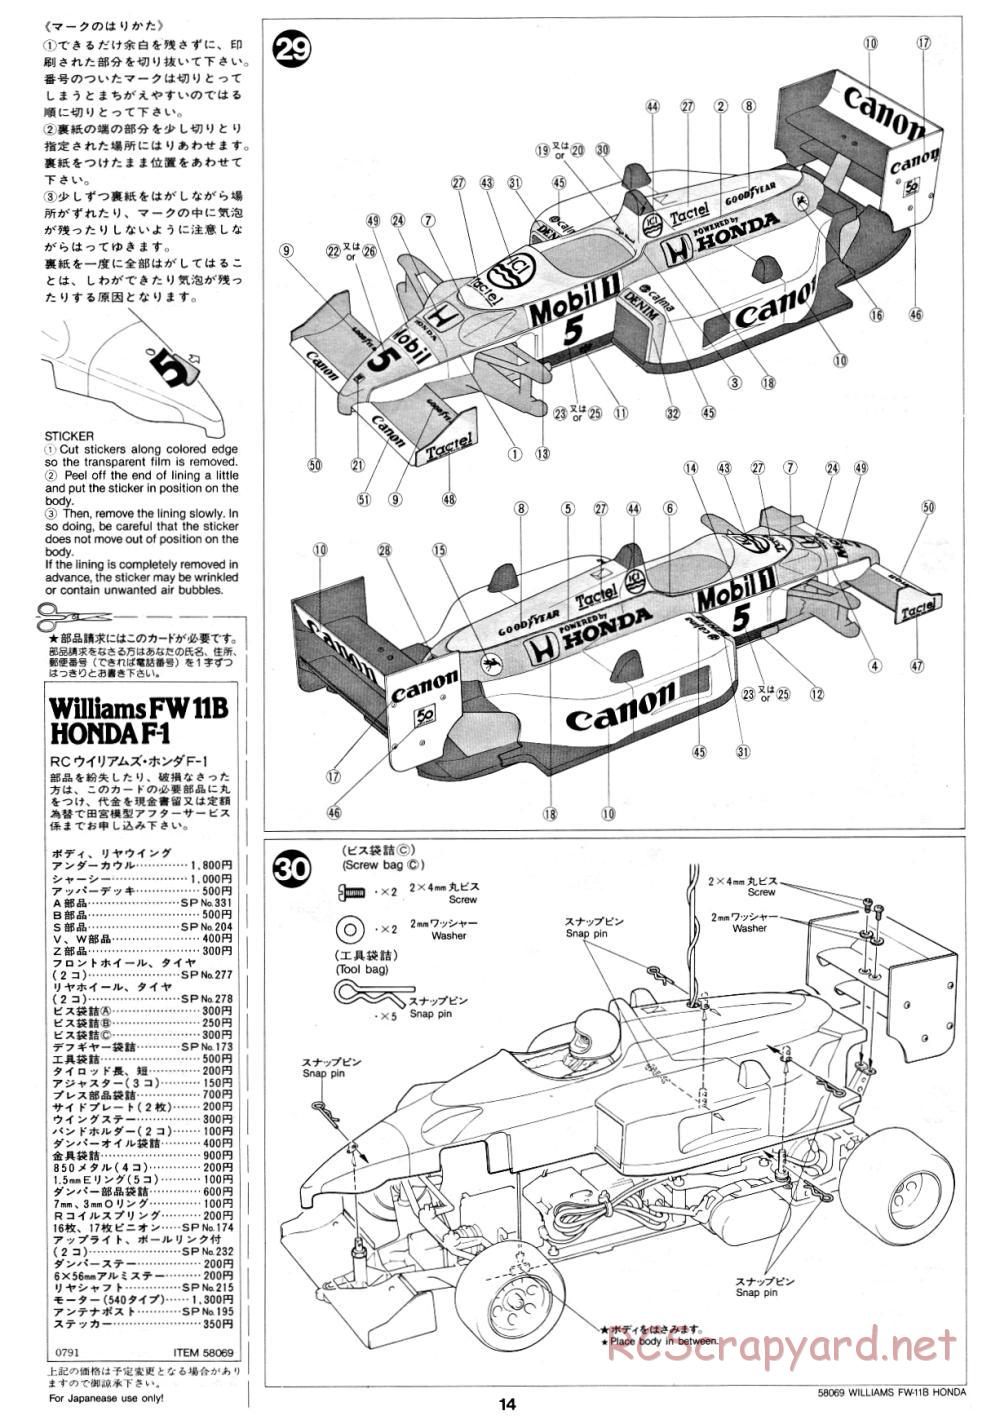 Tamiya - Williams FW-11B Honda F1 - 58069 - Manual - Page 14